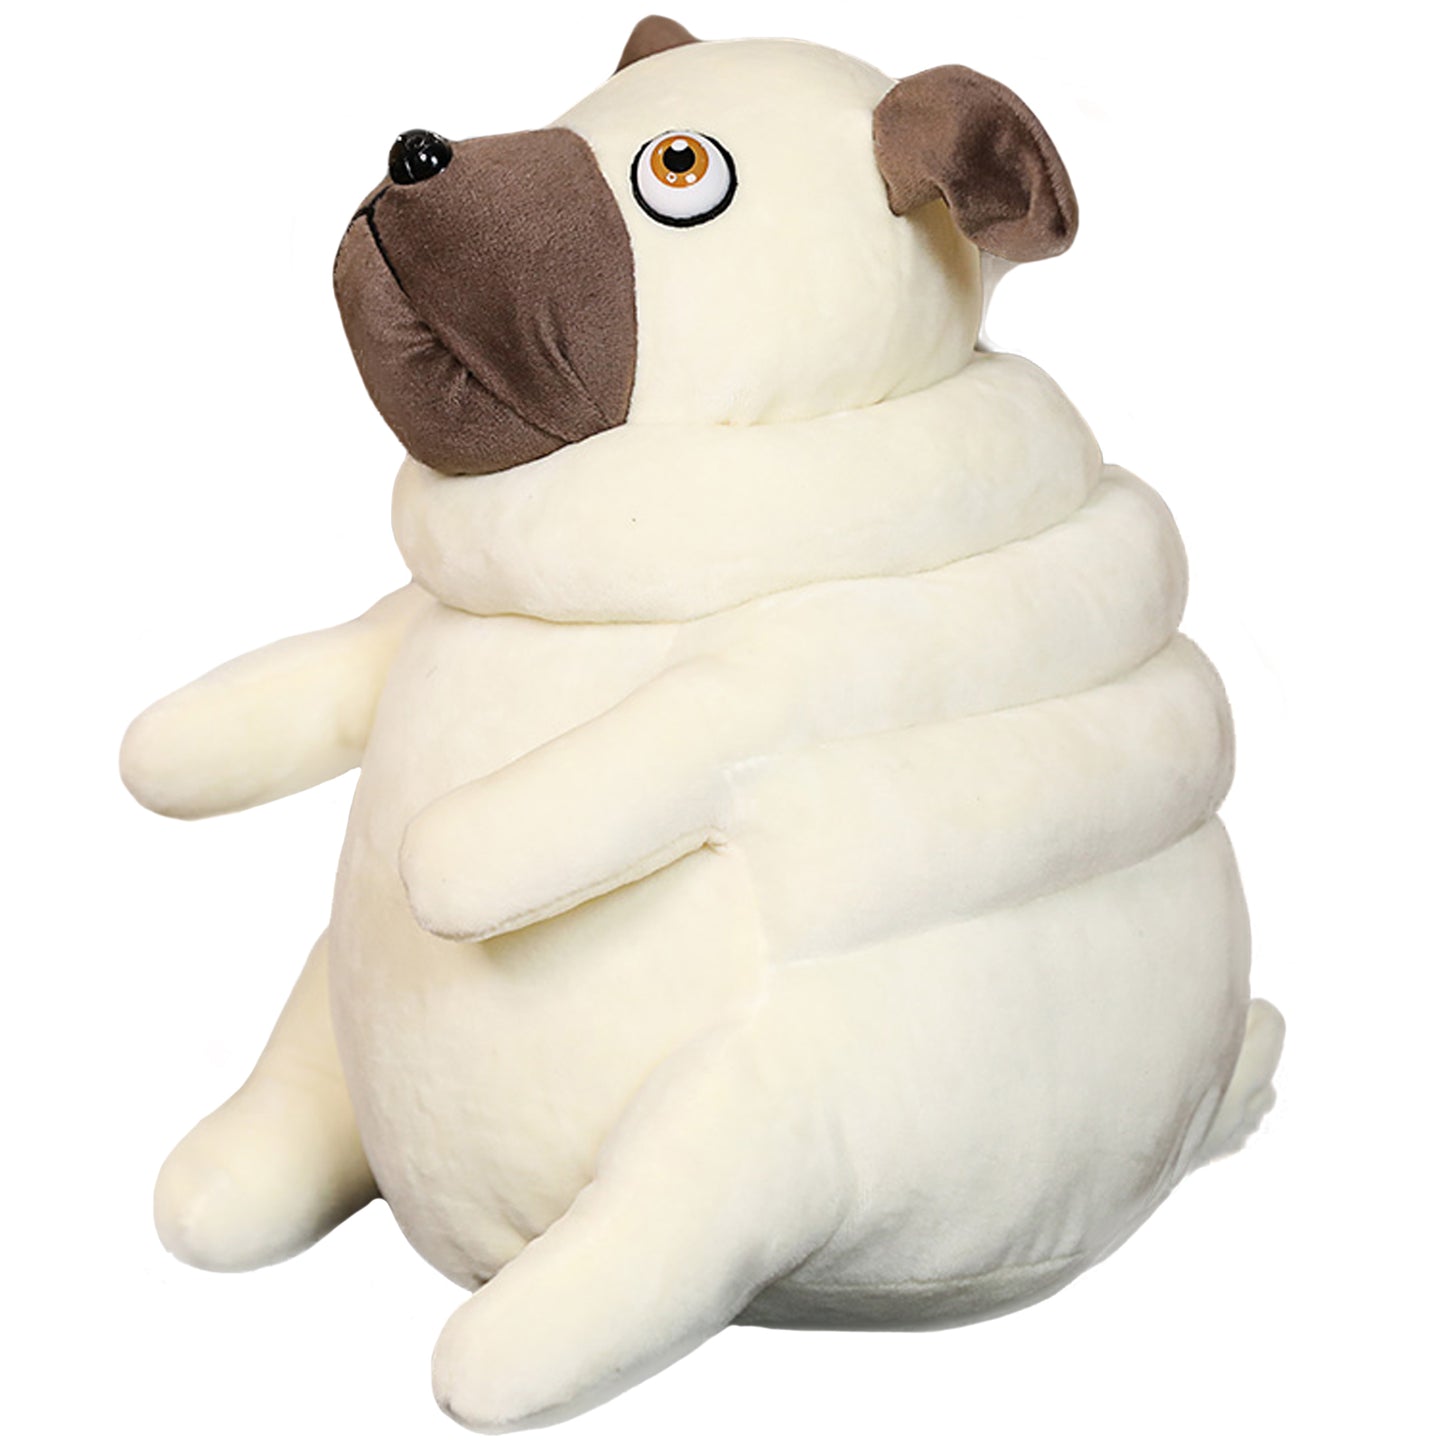 ELAINREN Fat Pug Dog Plush Puppy Stuffed Animals Toy Gifts,11.8Inch